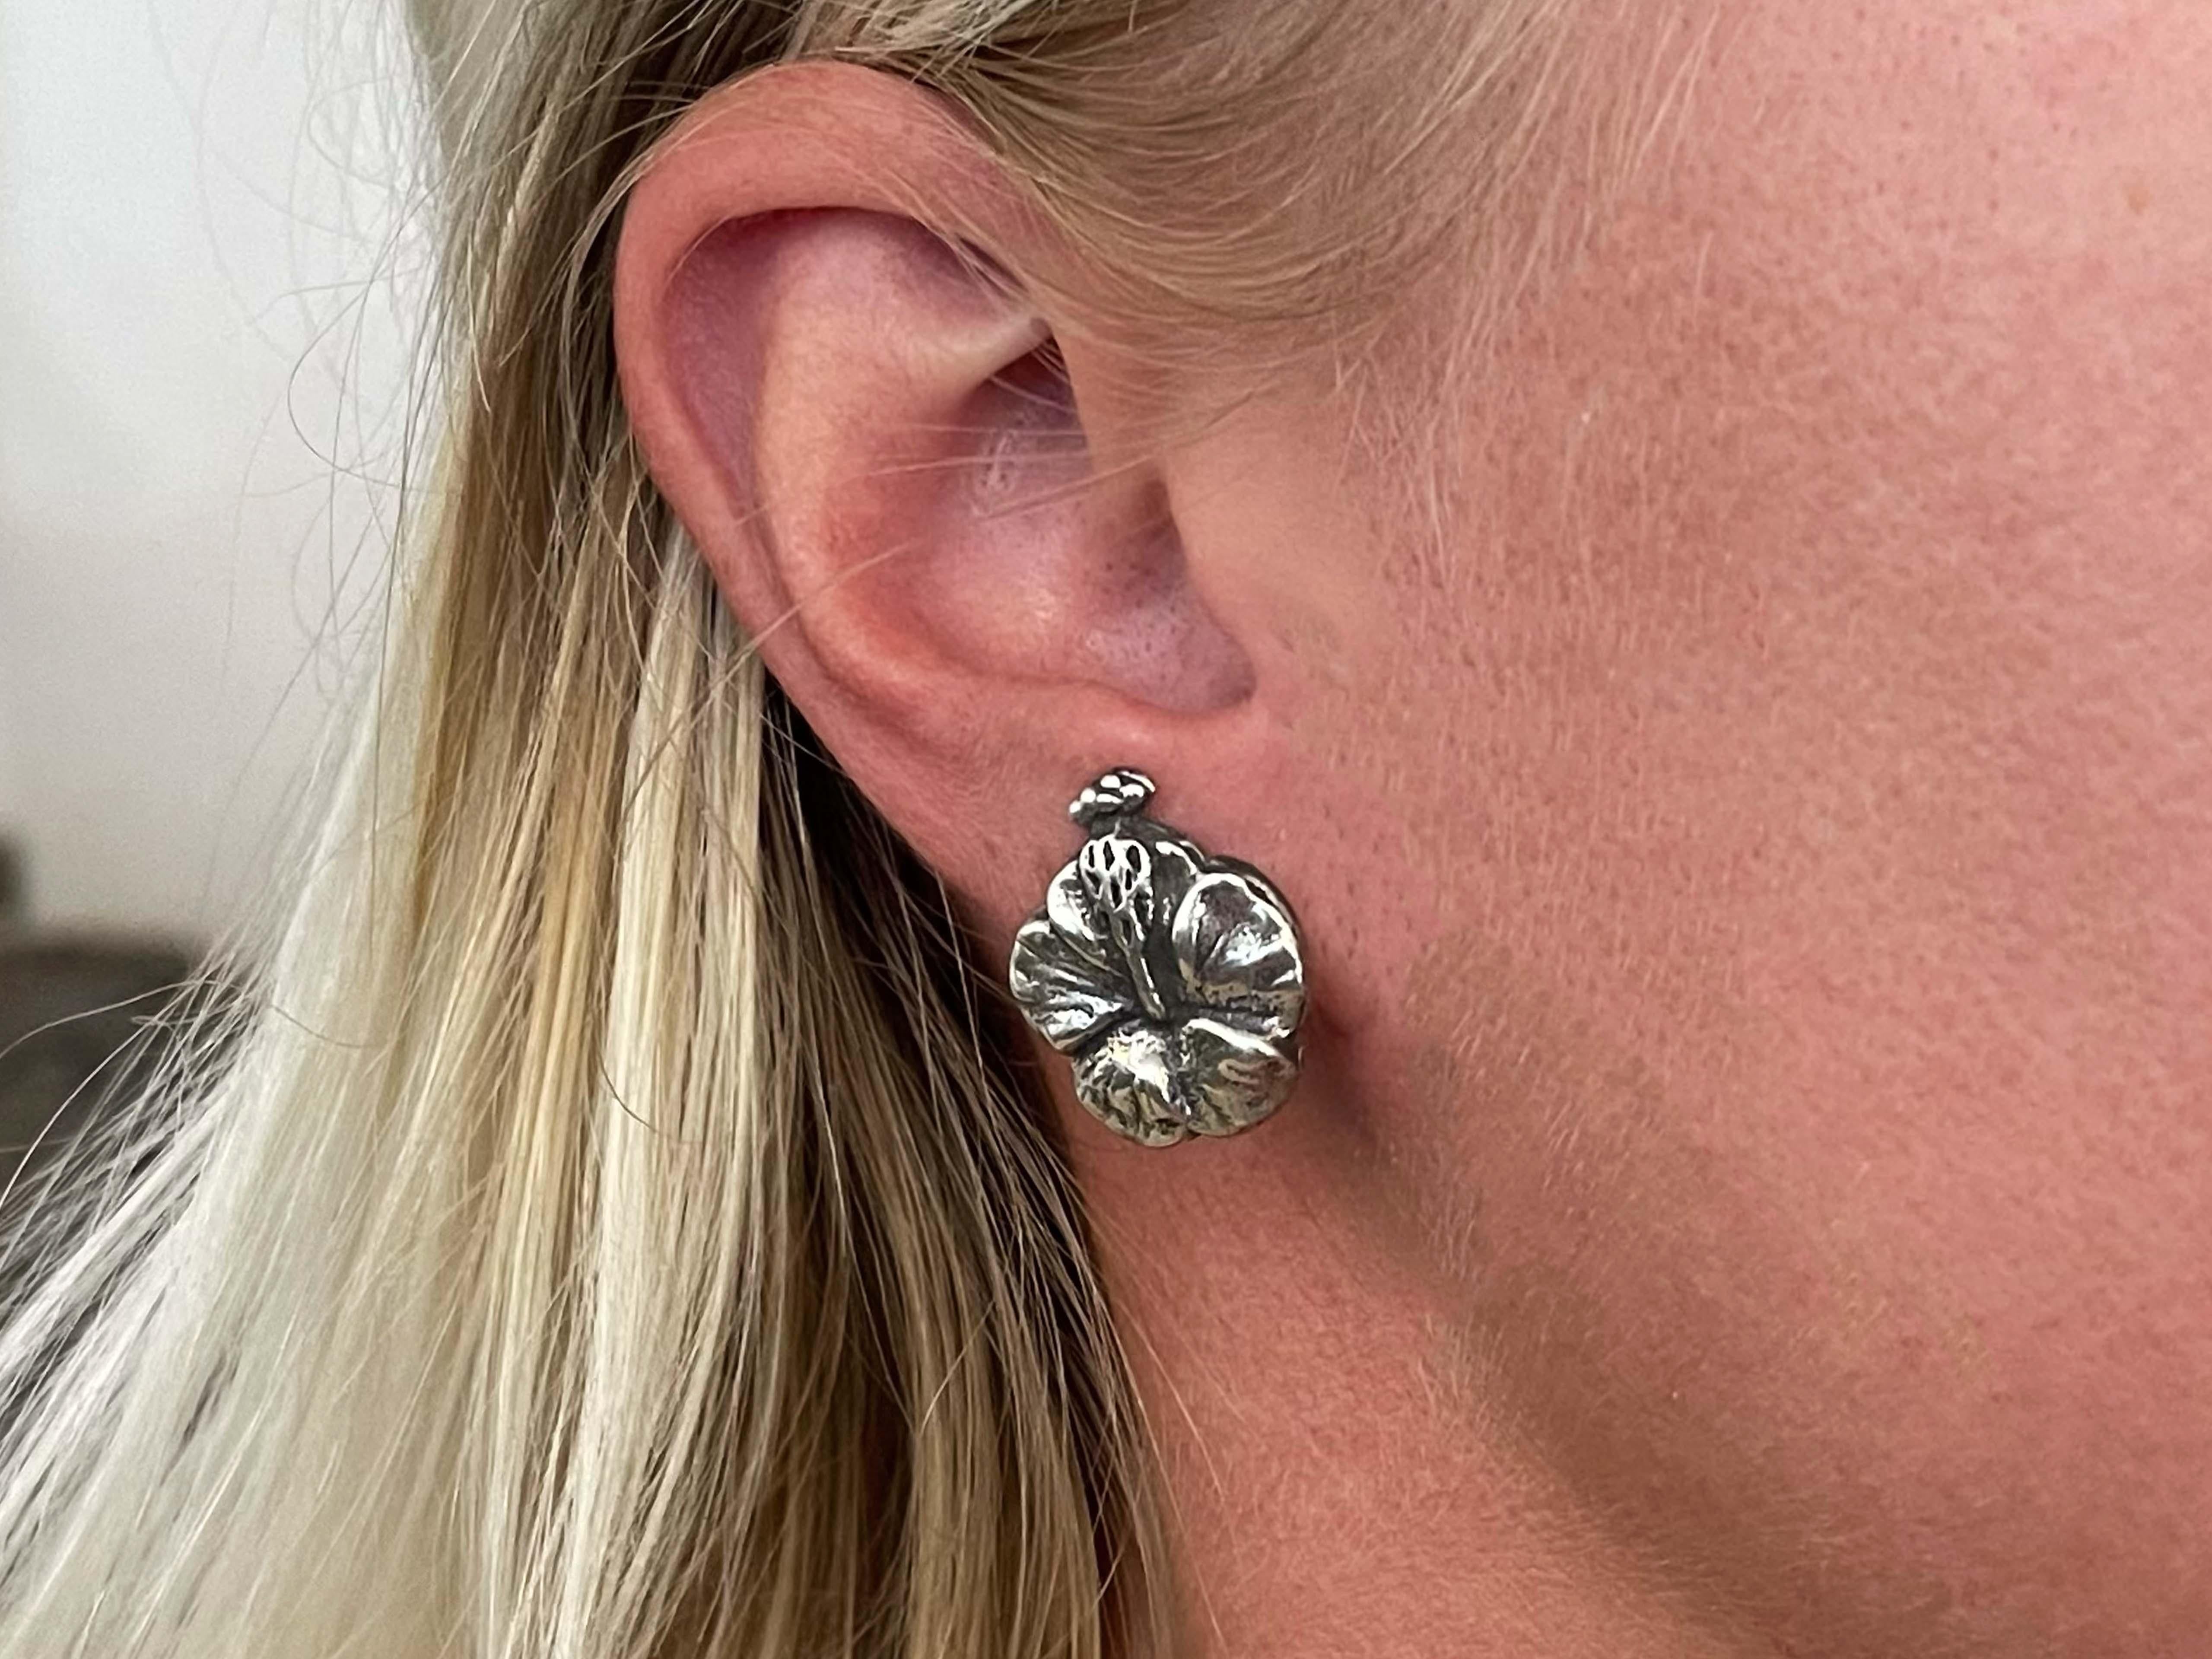 Earrings Specifications:

Designer: Ming's

Metal: Sterling Silver 

Earring Measurements: 0.7